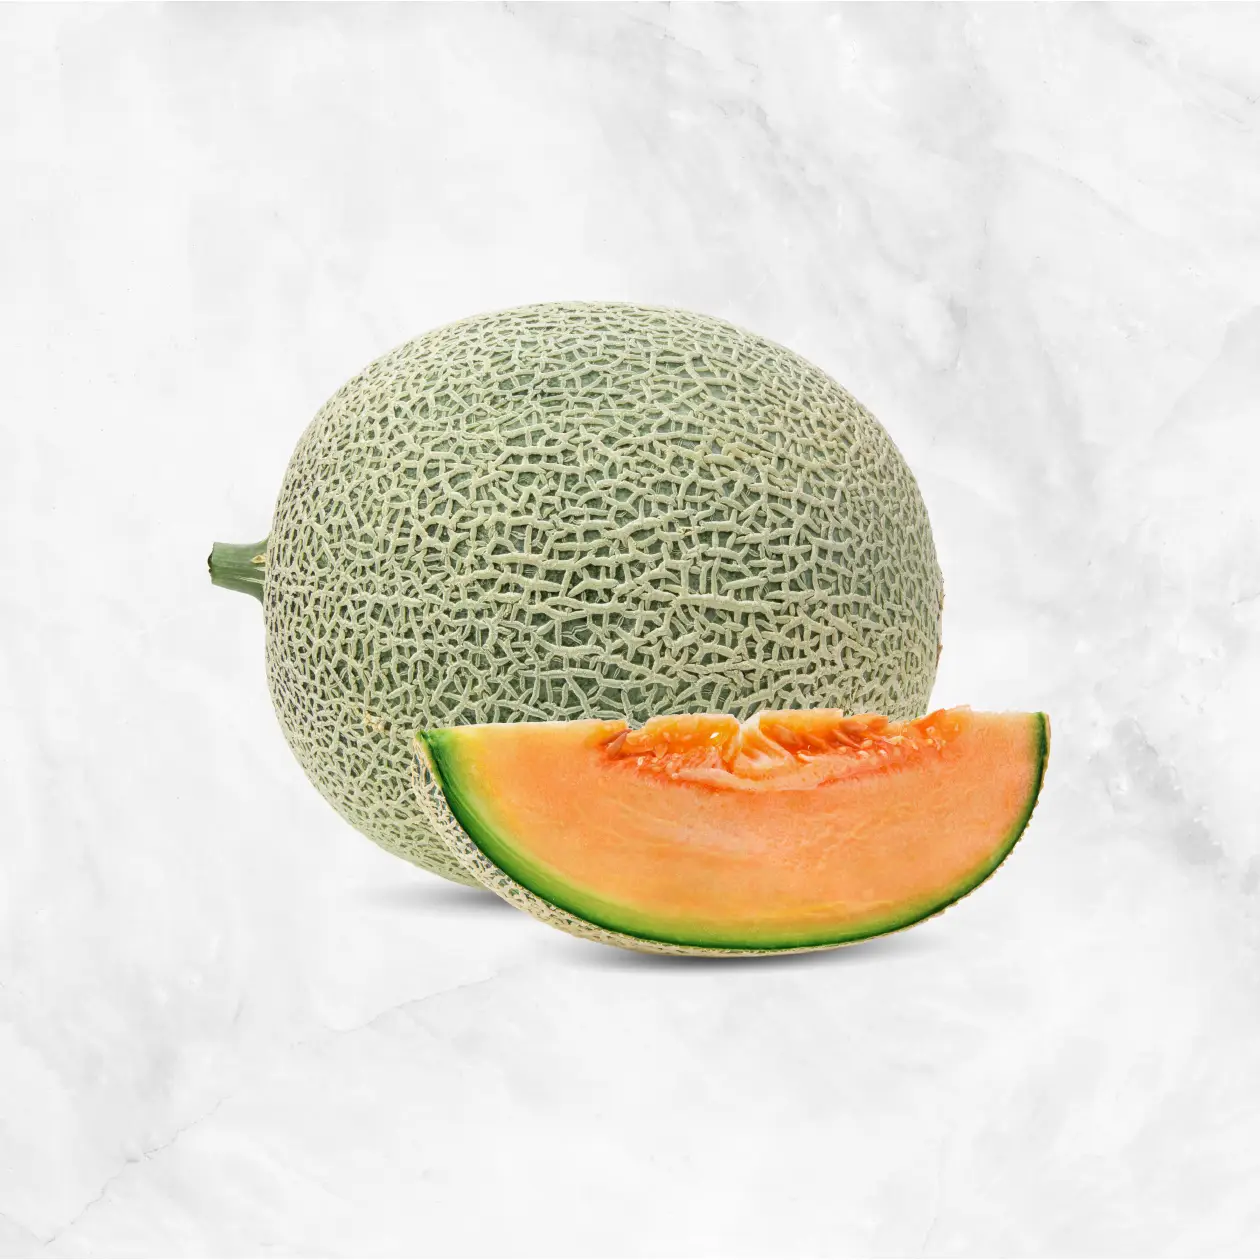 Organic Cantaloupe Melon